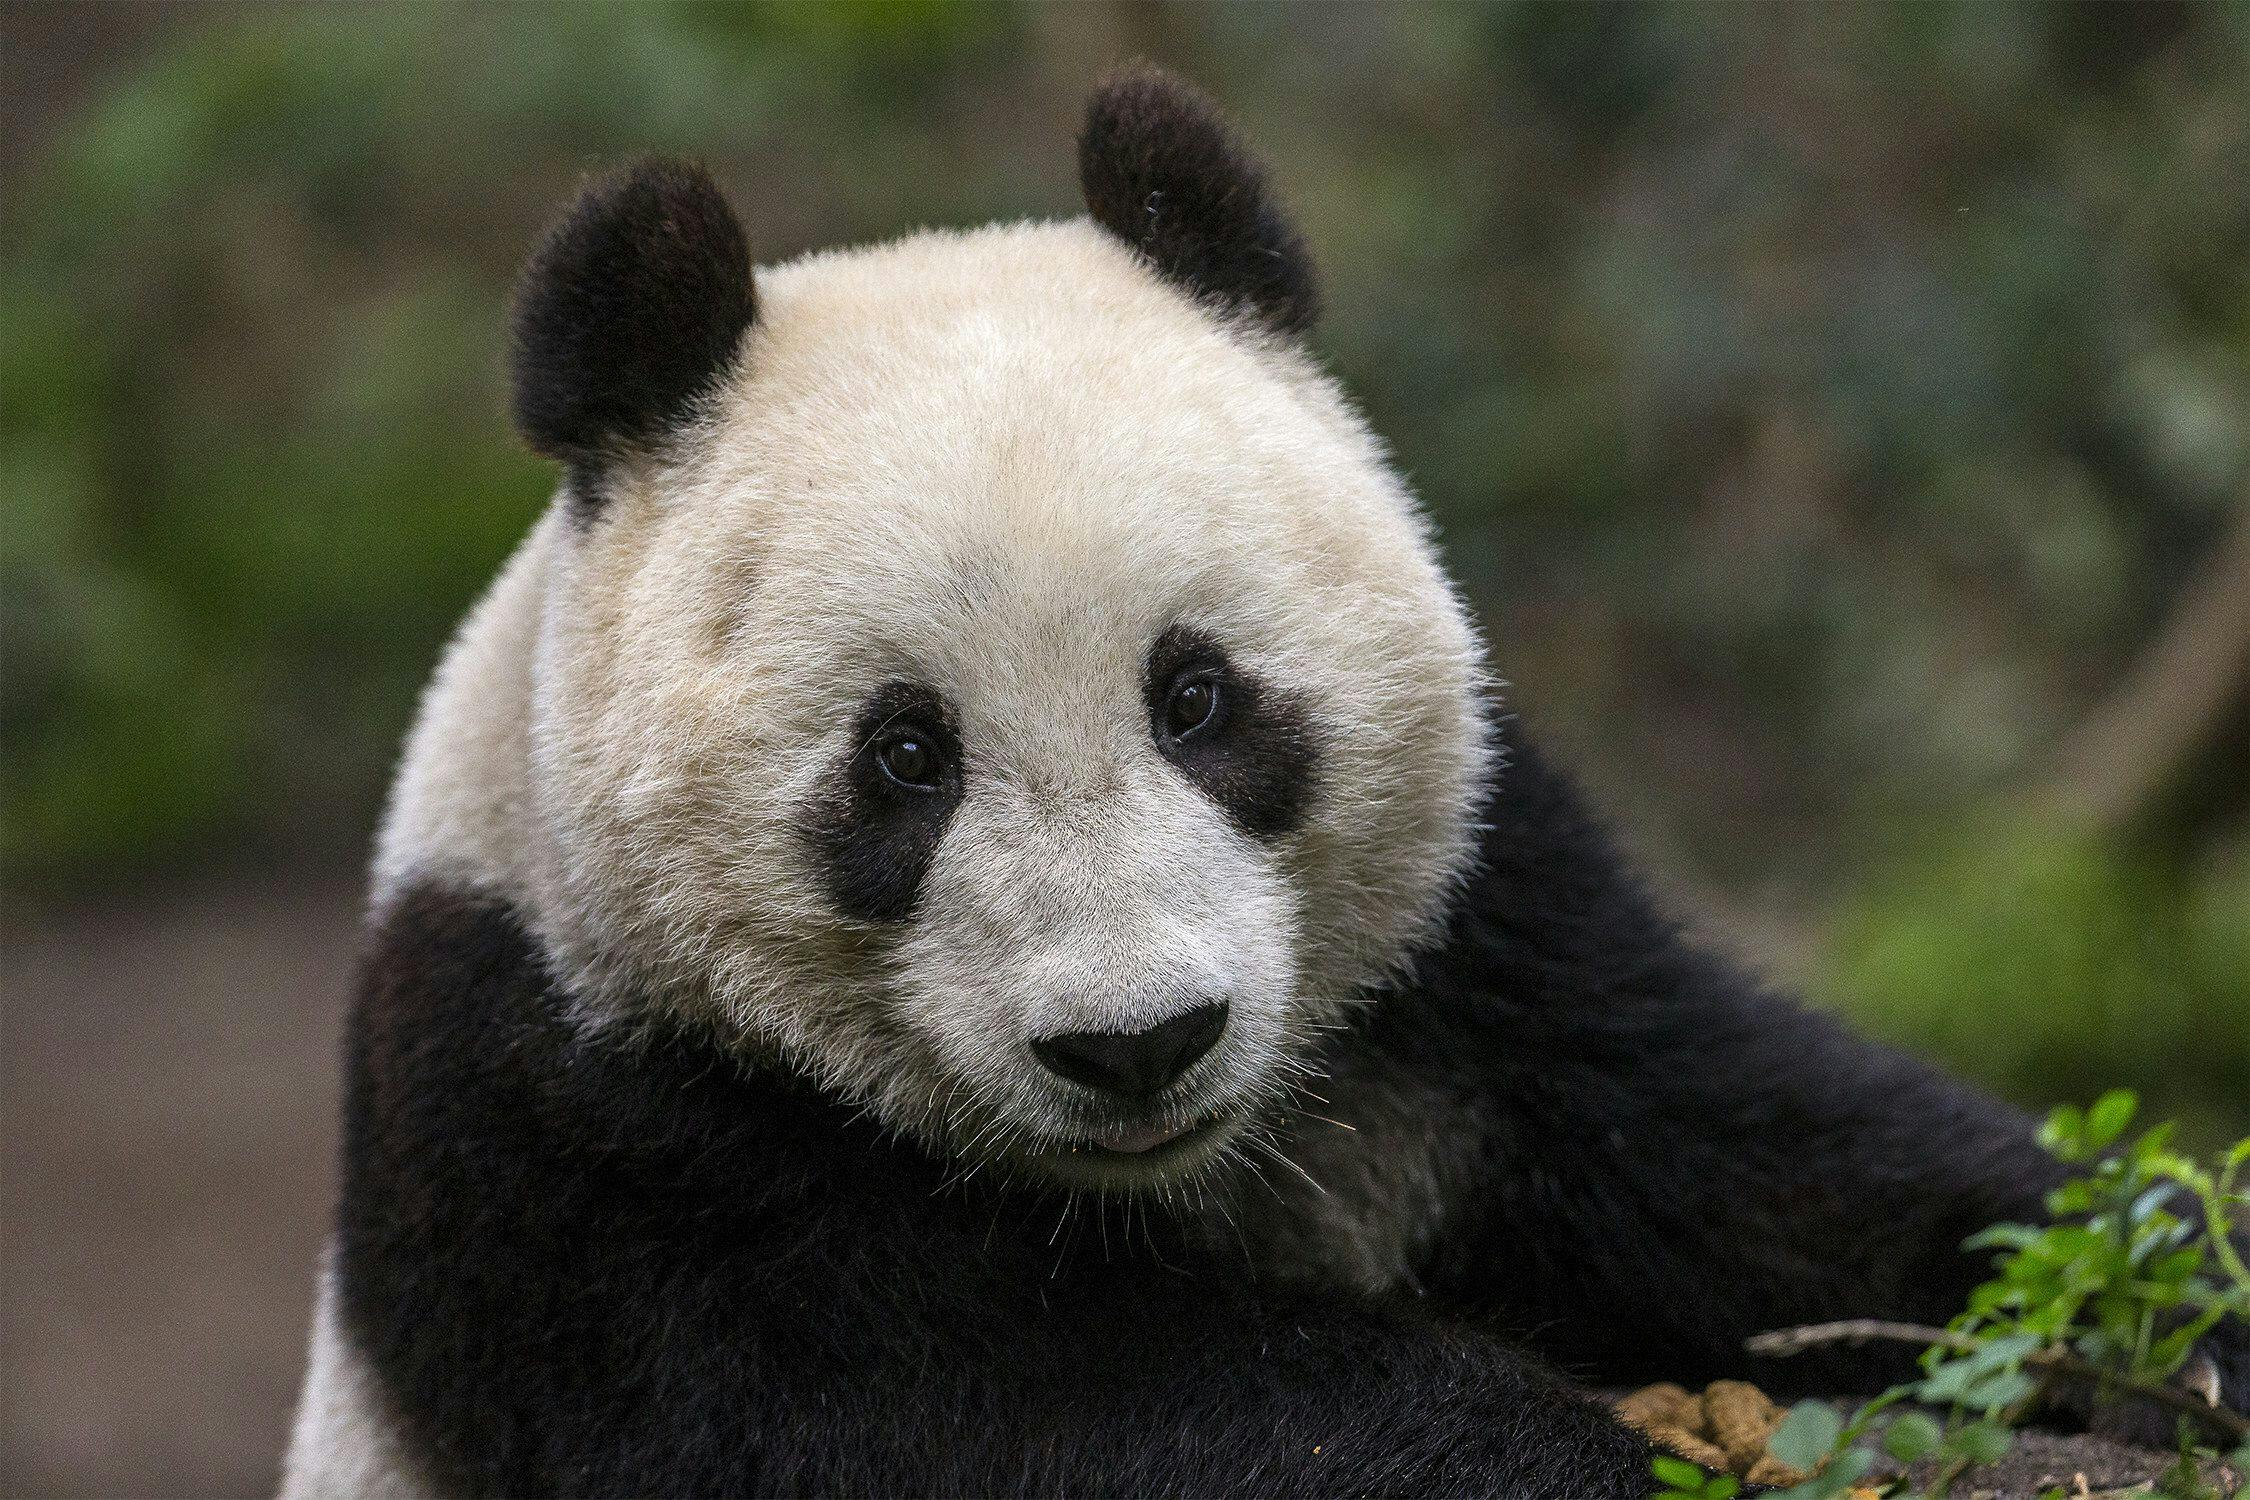 San Diego Zoo welcomes back giant pandas